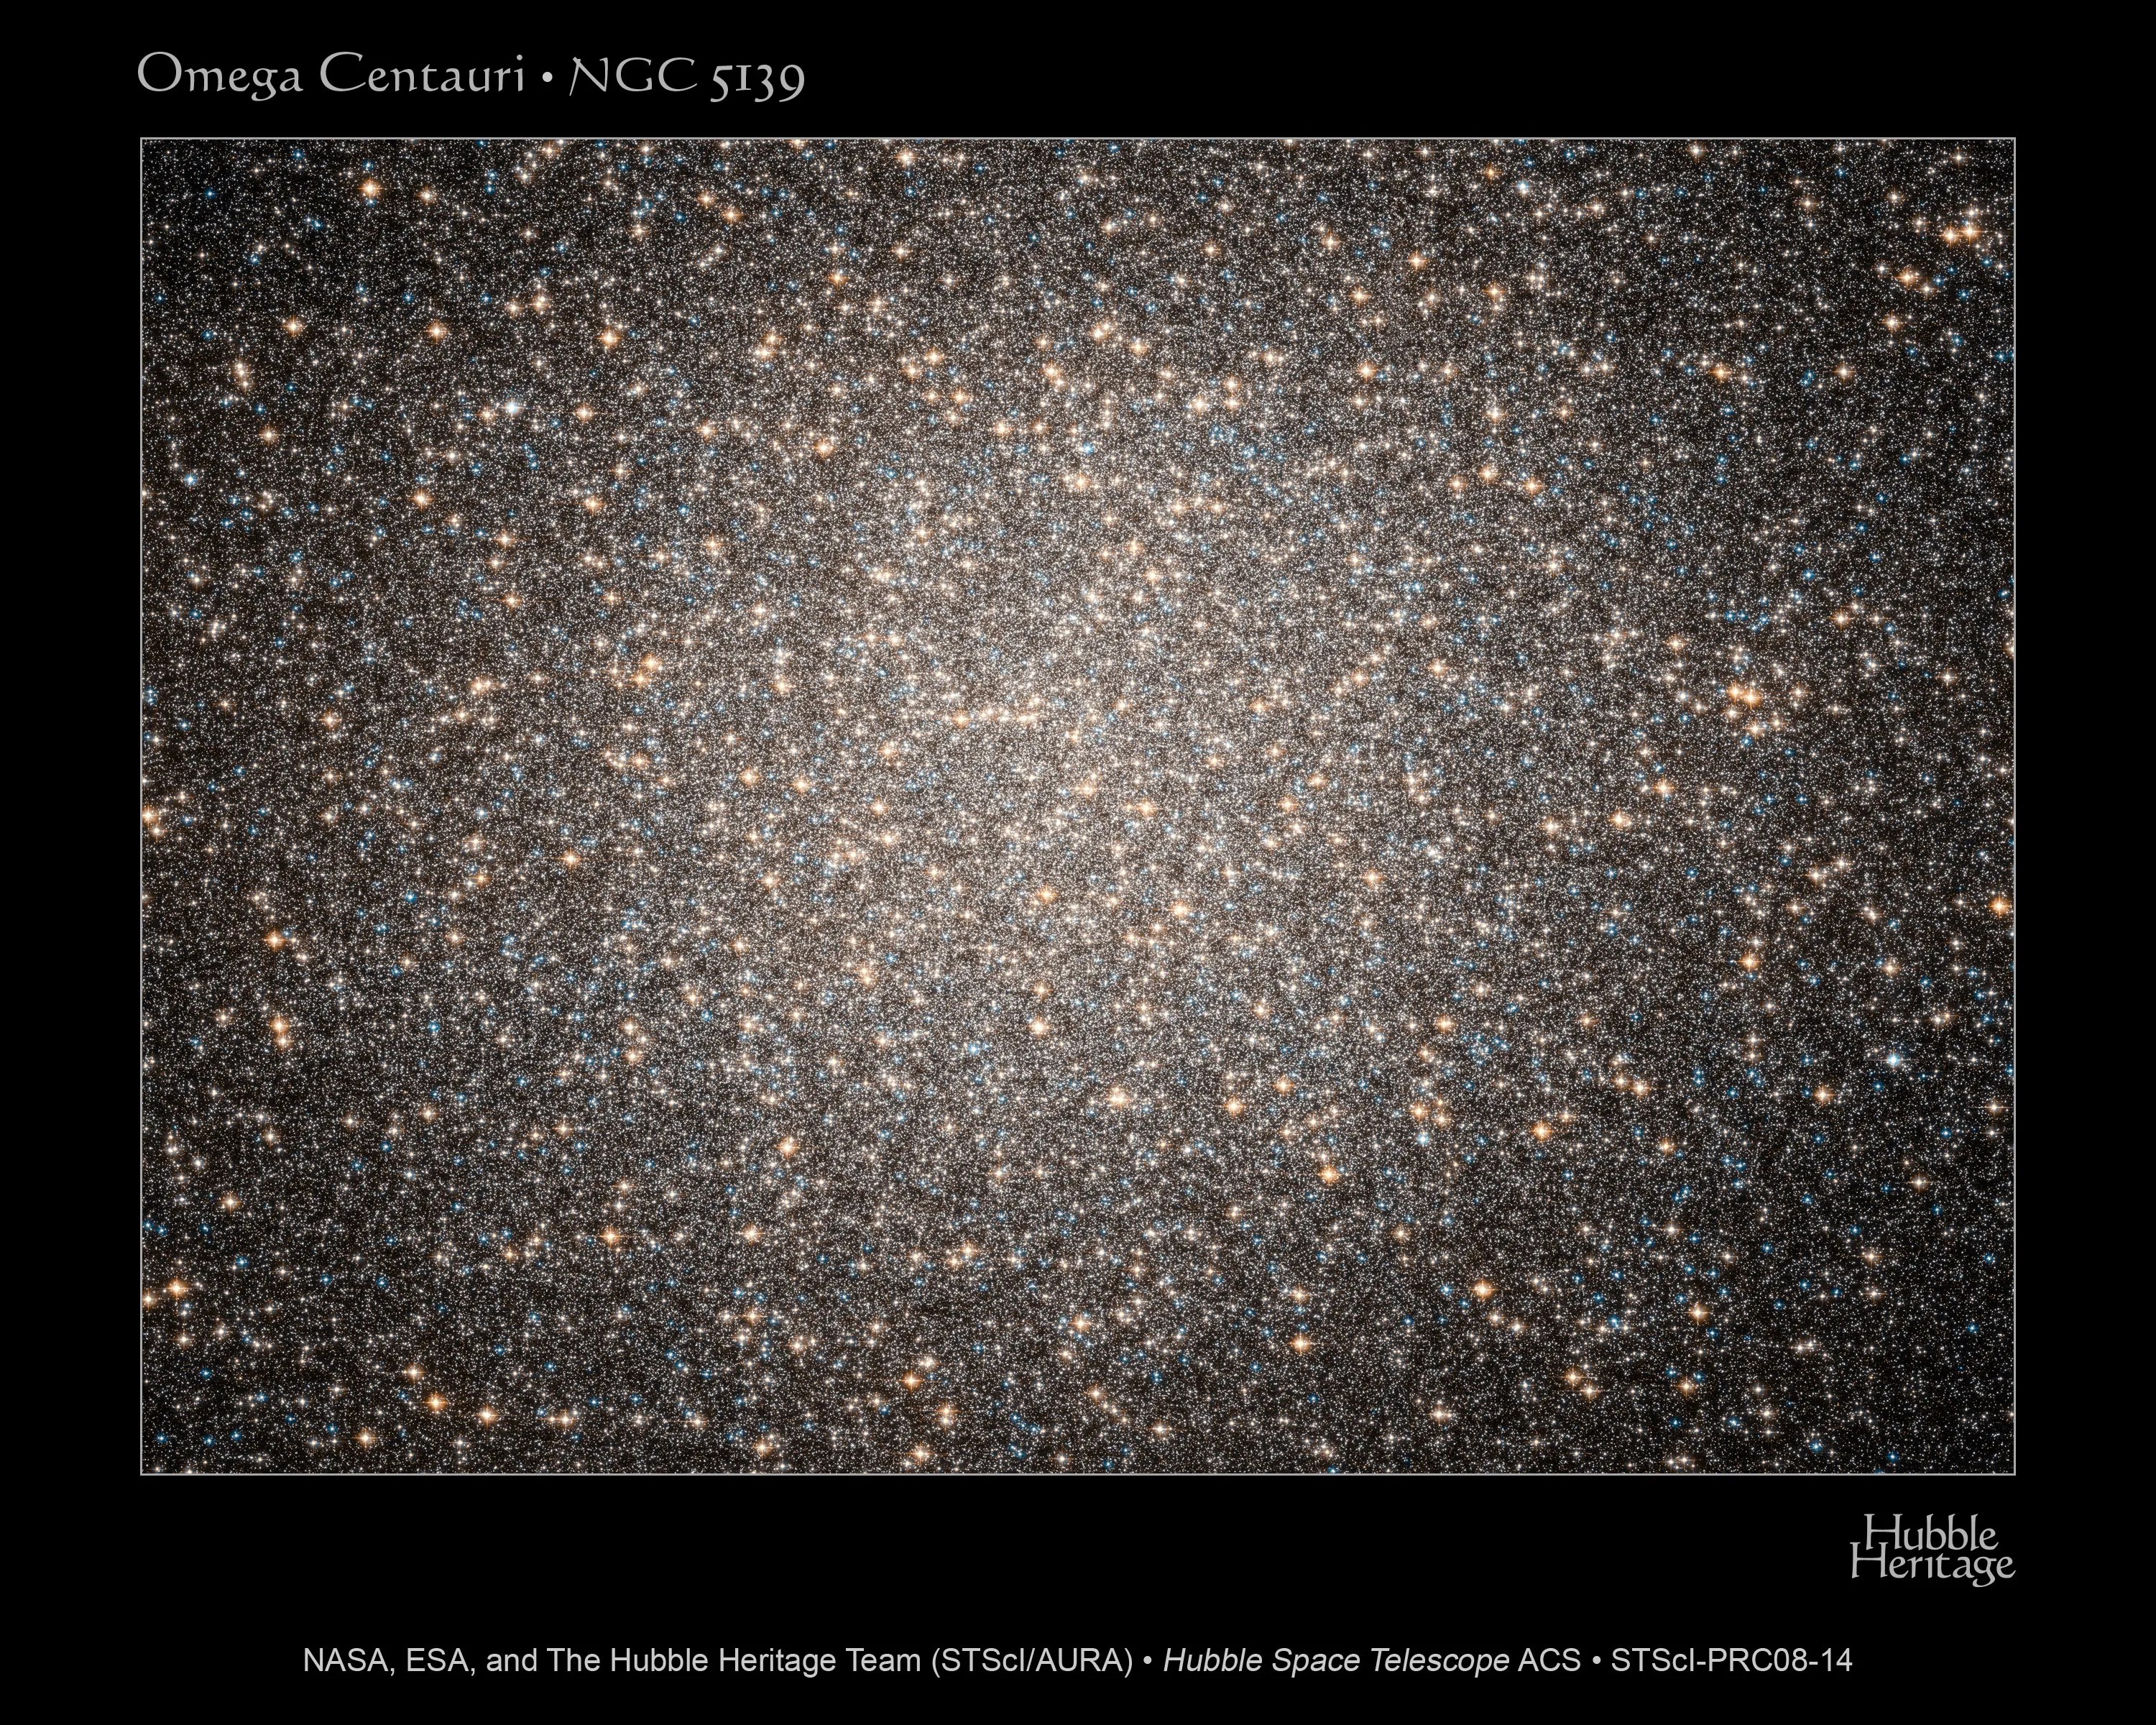 Image of Omega Centauri